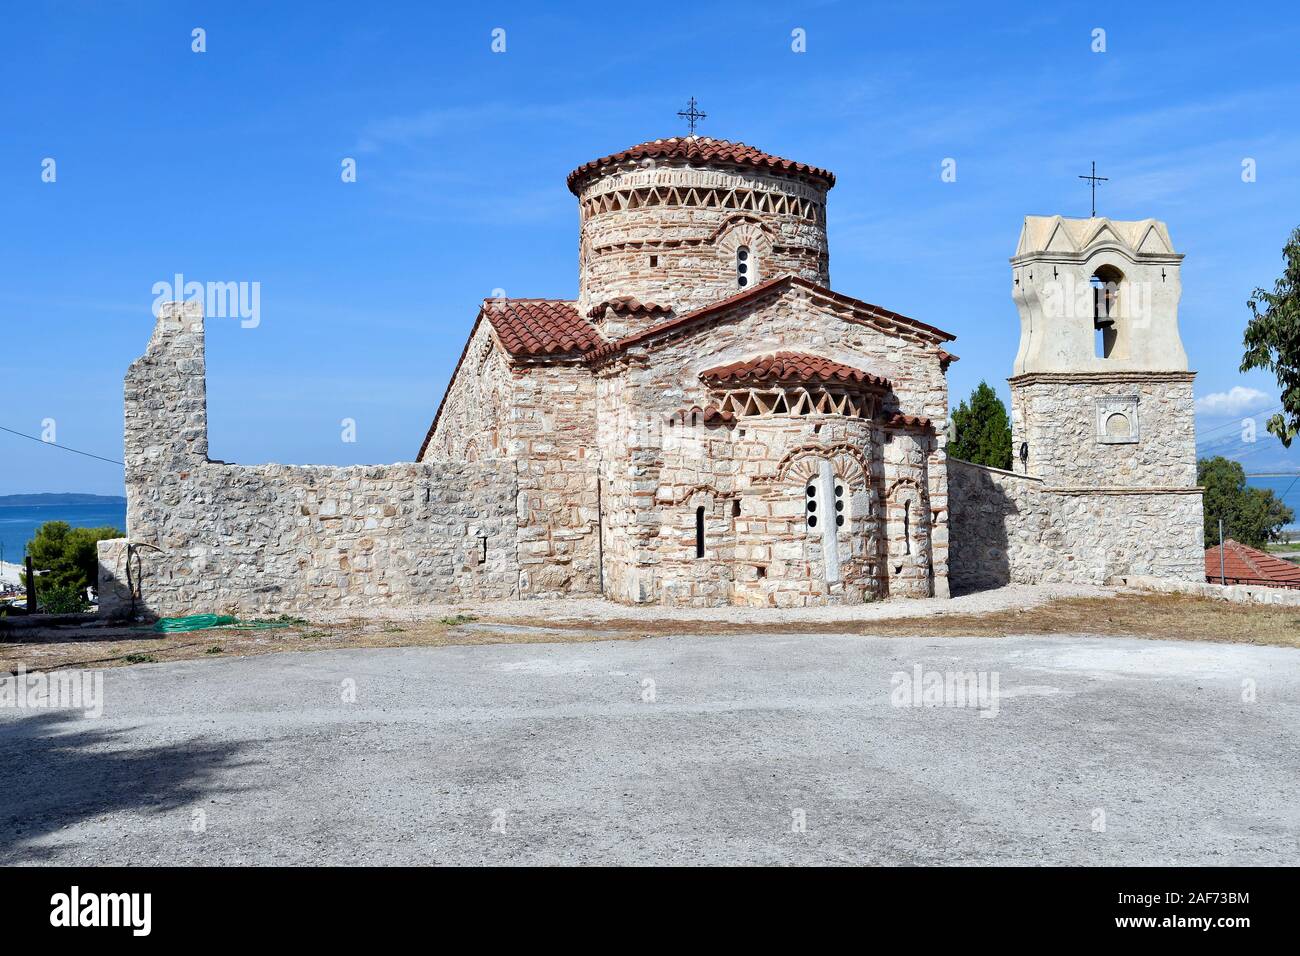 Greece, Epirus, Byzantine church Panagia Koronisia in Koronissia village situated in Ambracian Gulf Stock Photo